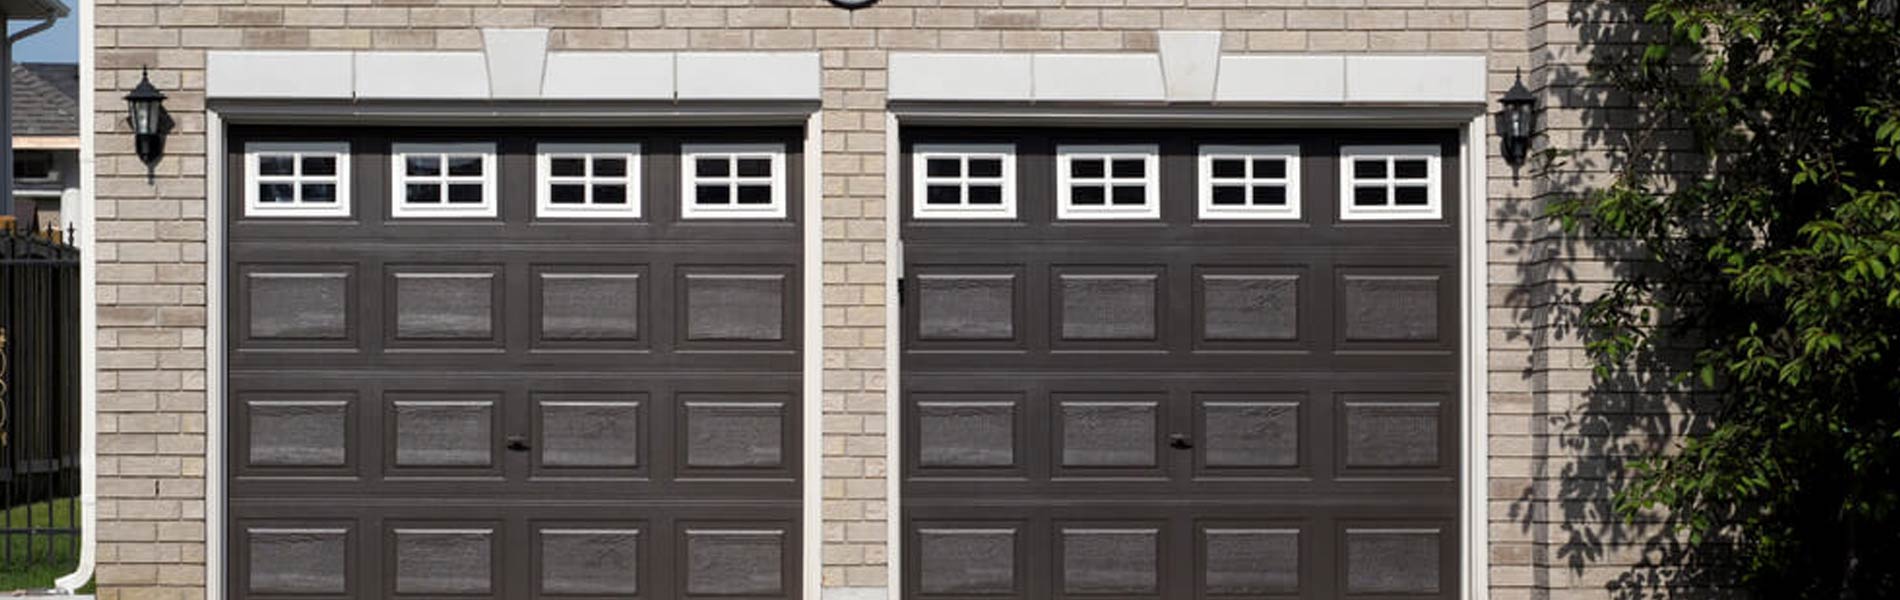 Simple Garage Door Experts Dublin Ca with Simple Decor